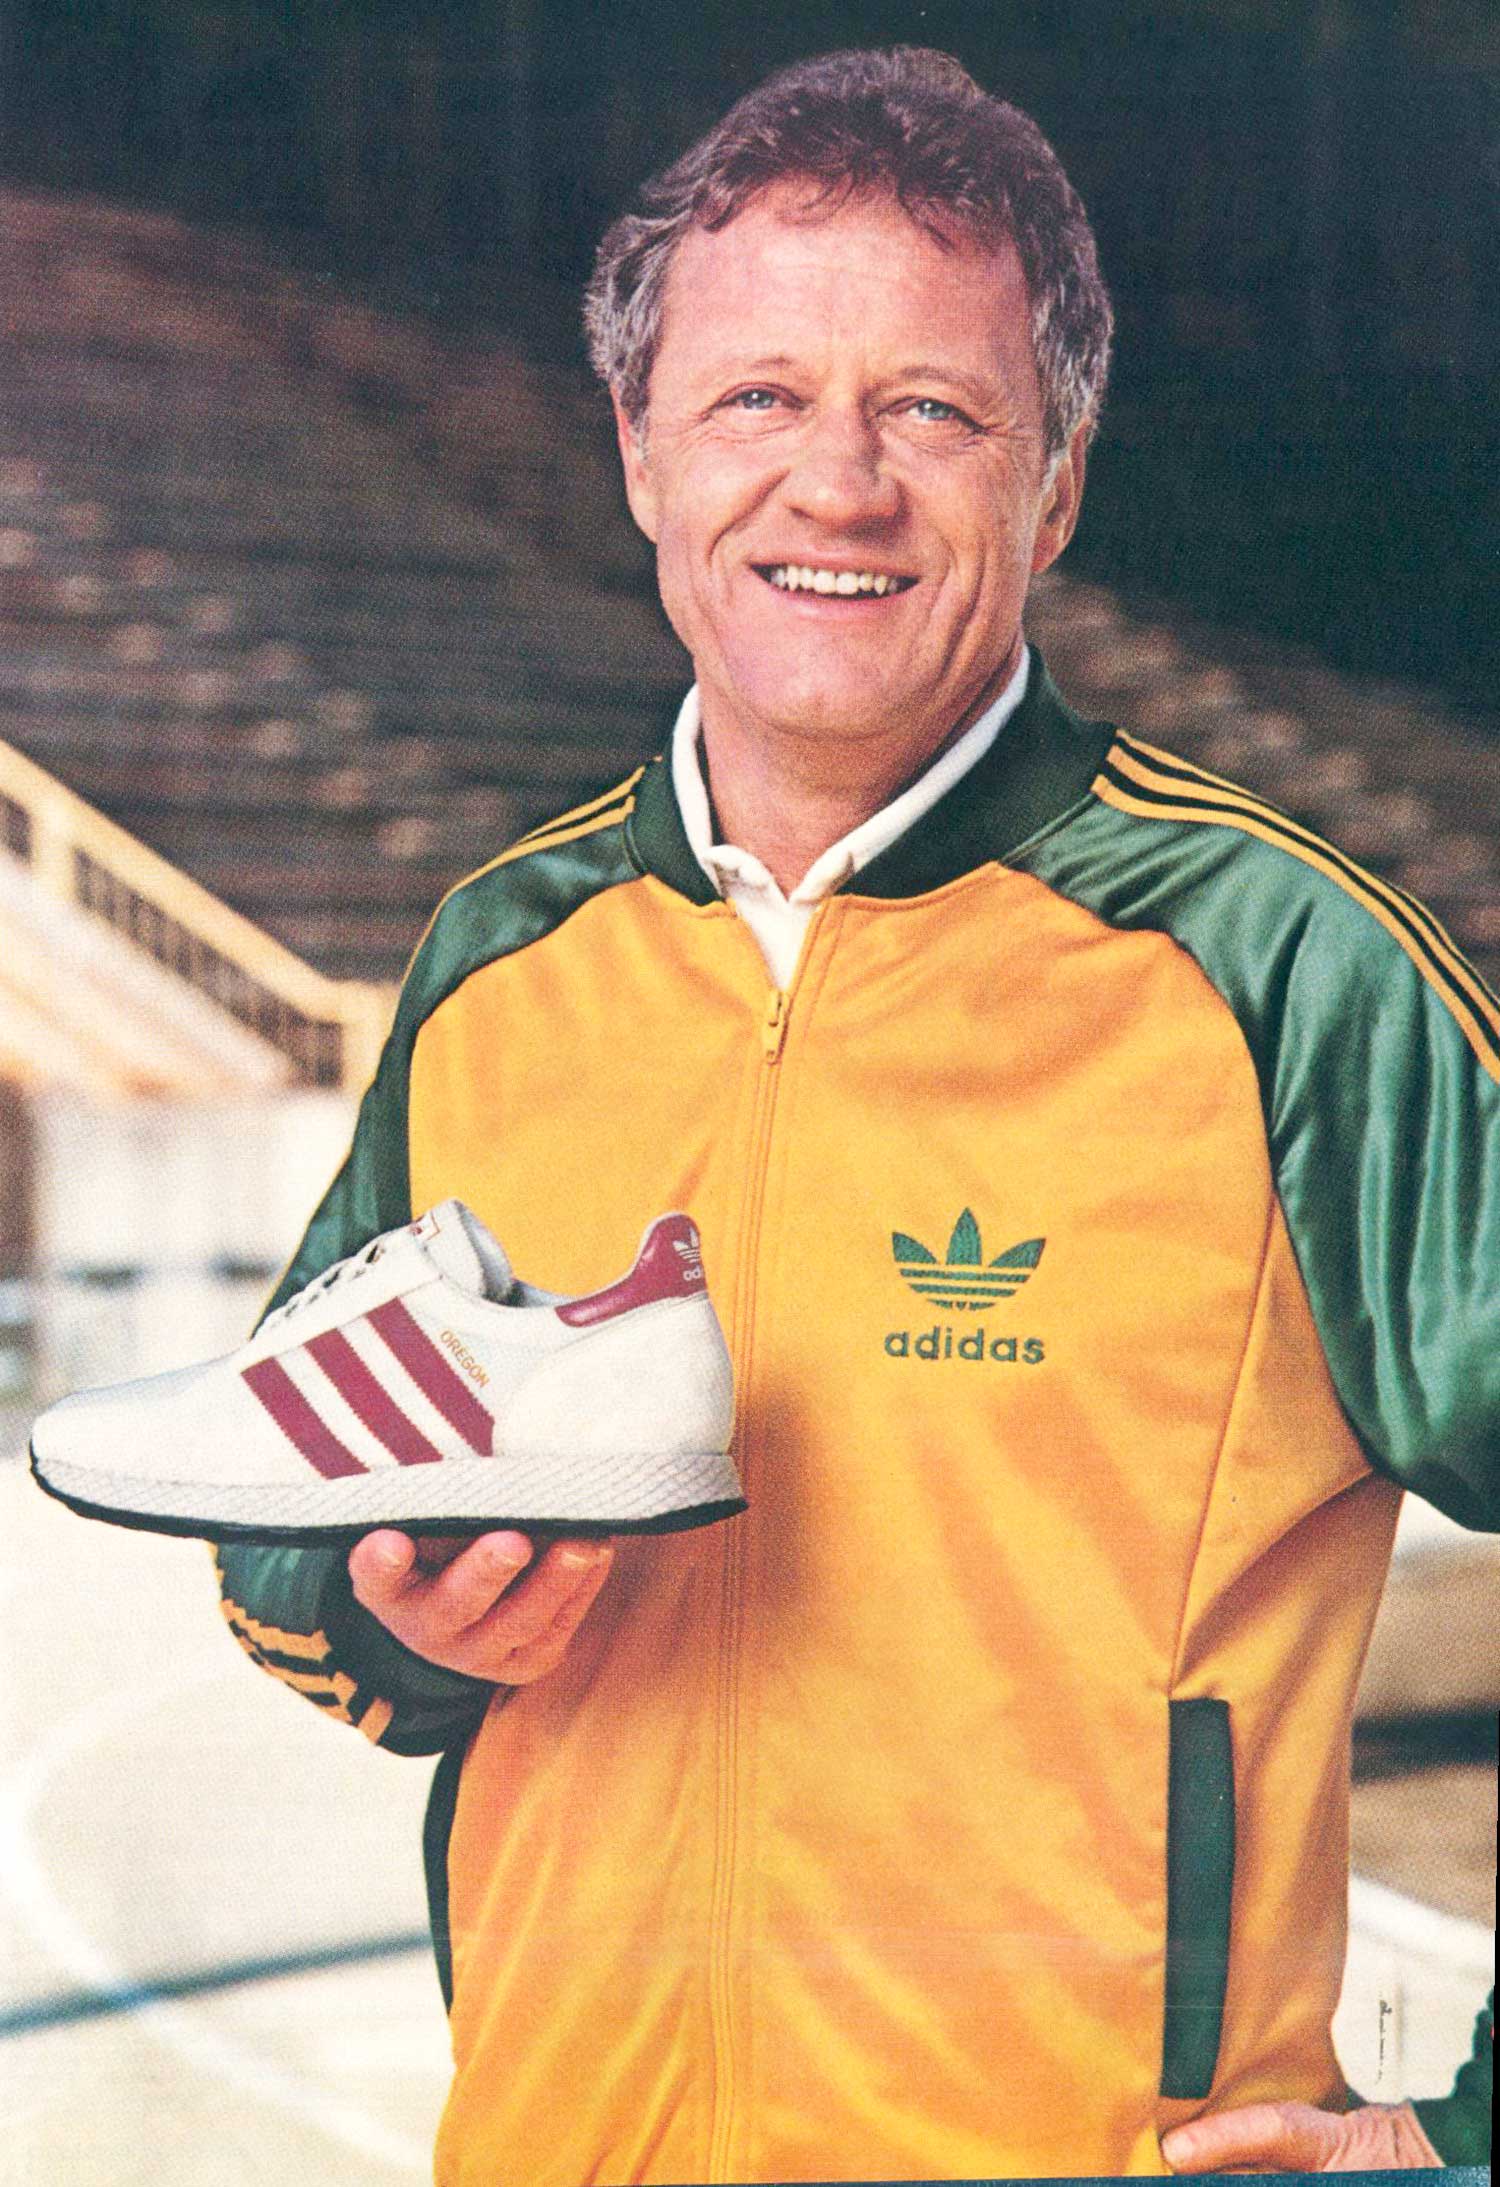 adidas 1982 Oregon Bill Dellinger vintage sneaker ad @ The Deffest